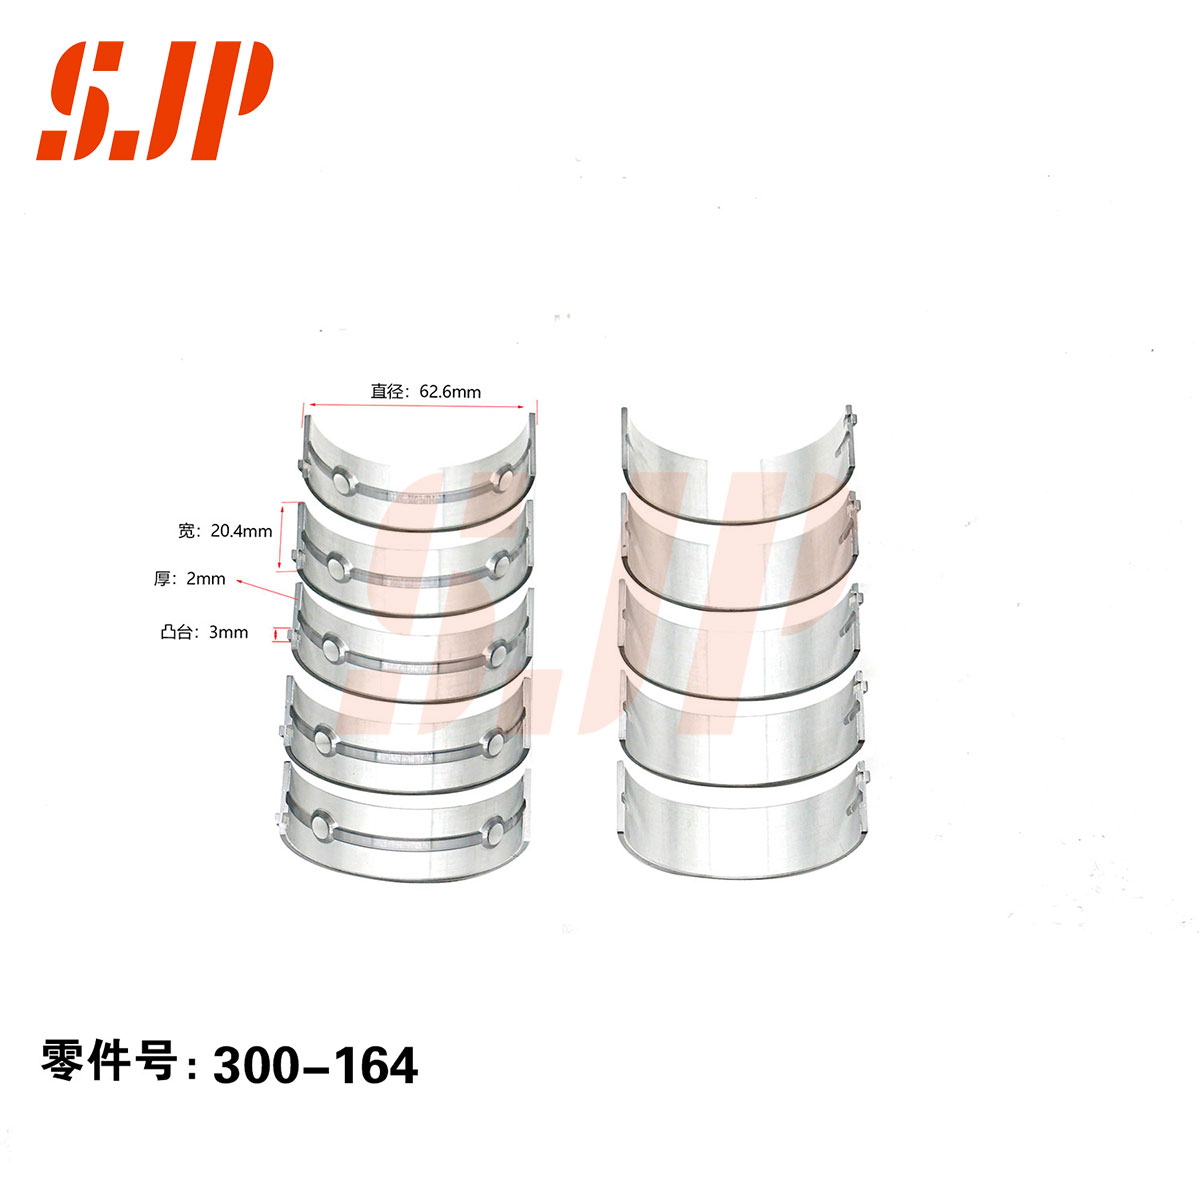 SJ-300-164 Main Bearing Set For MITSUBISHI 4G63T/64/69